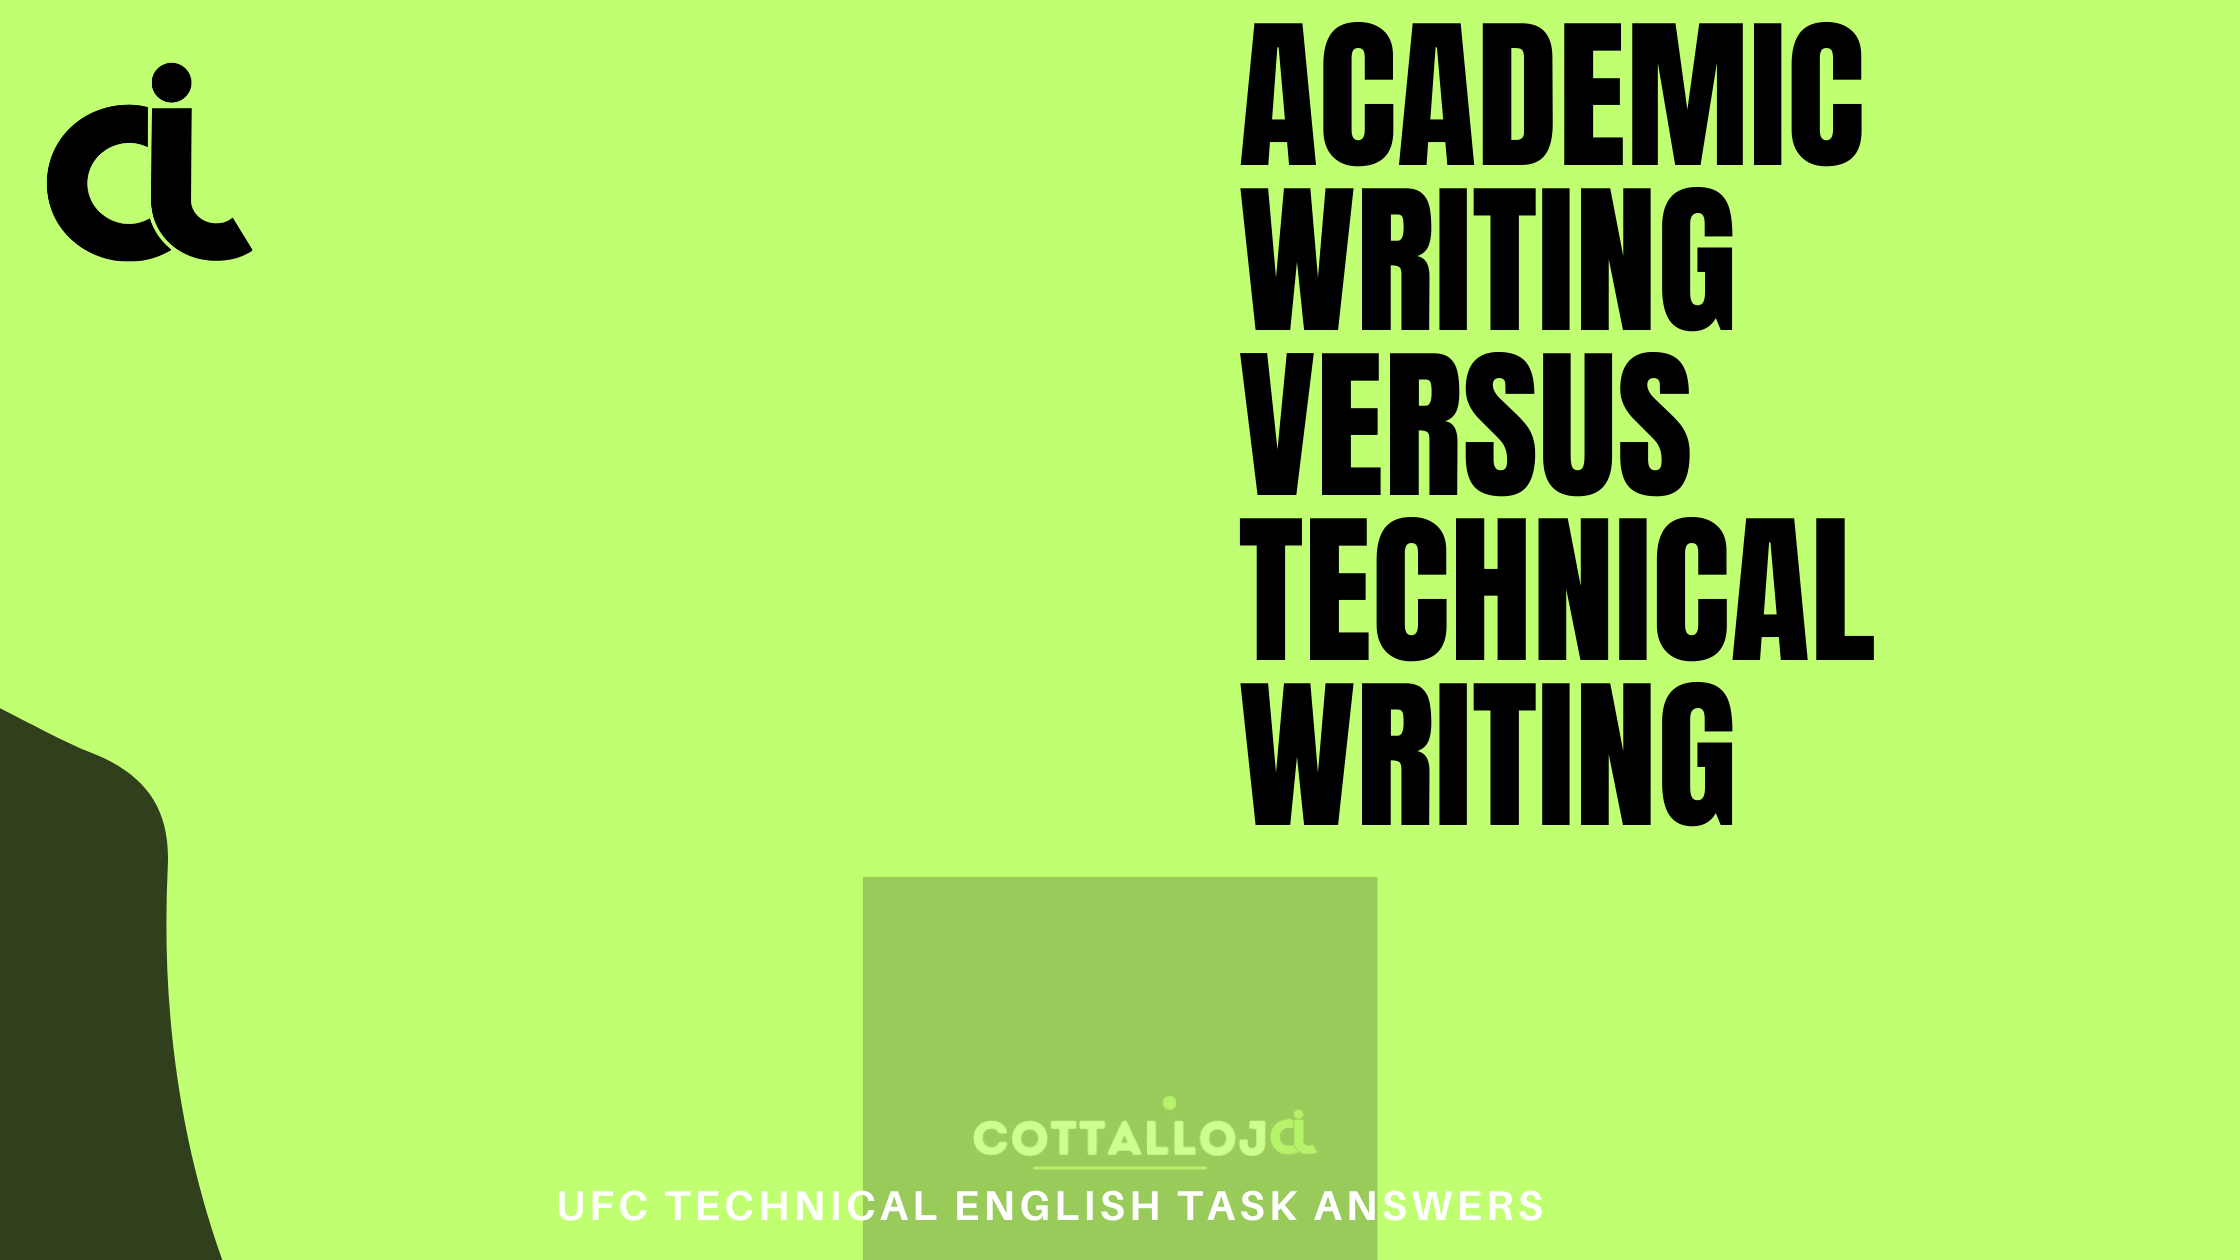 Academic Writing Versus Technical Writing